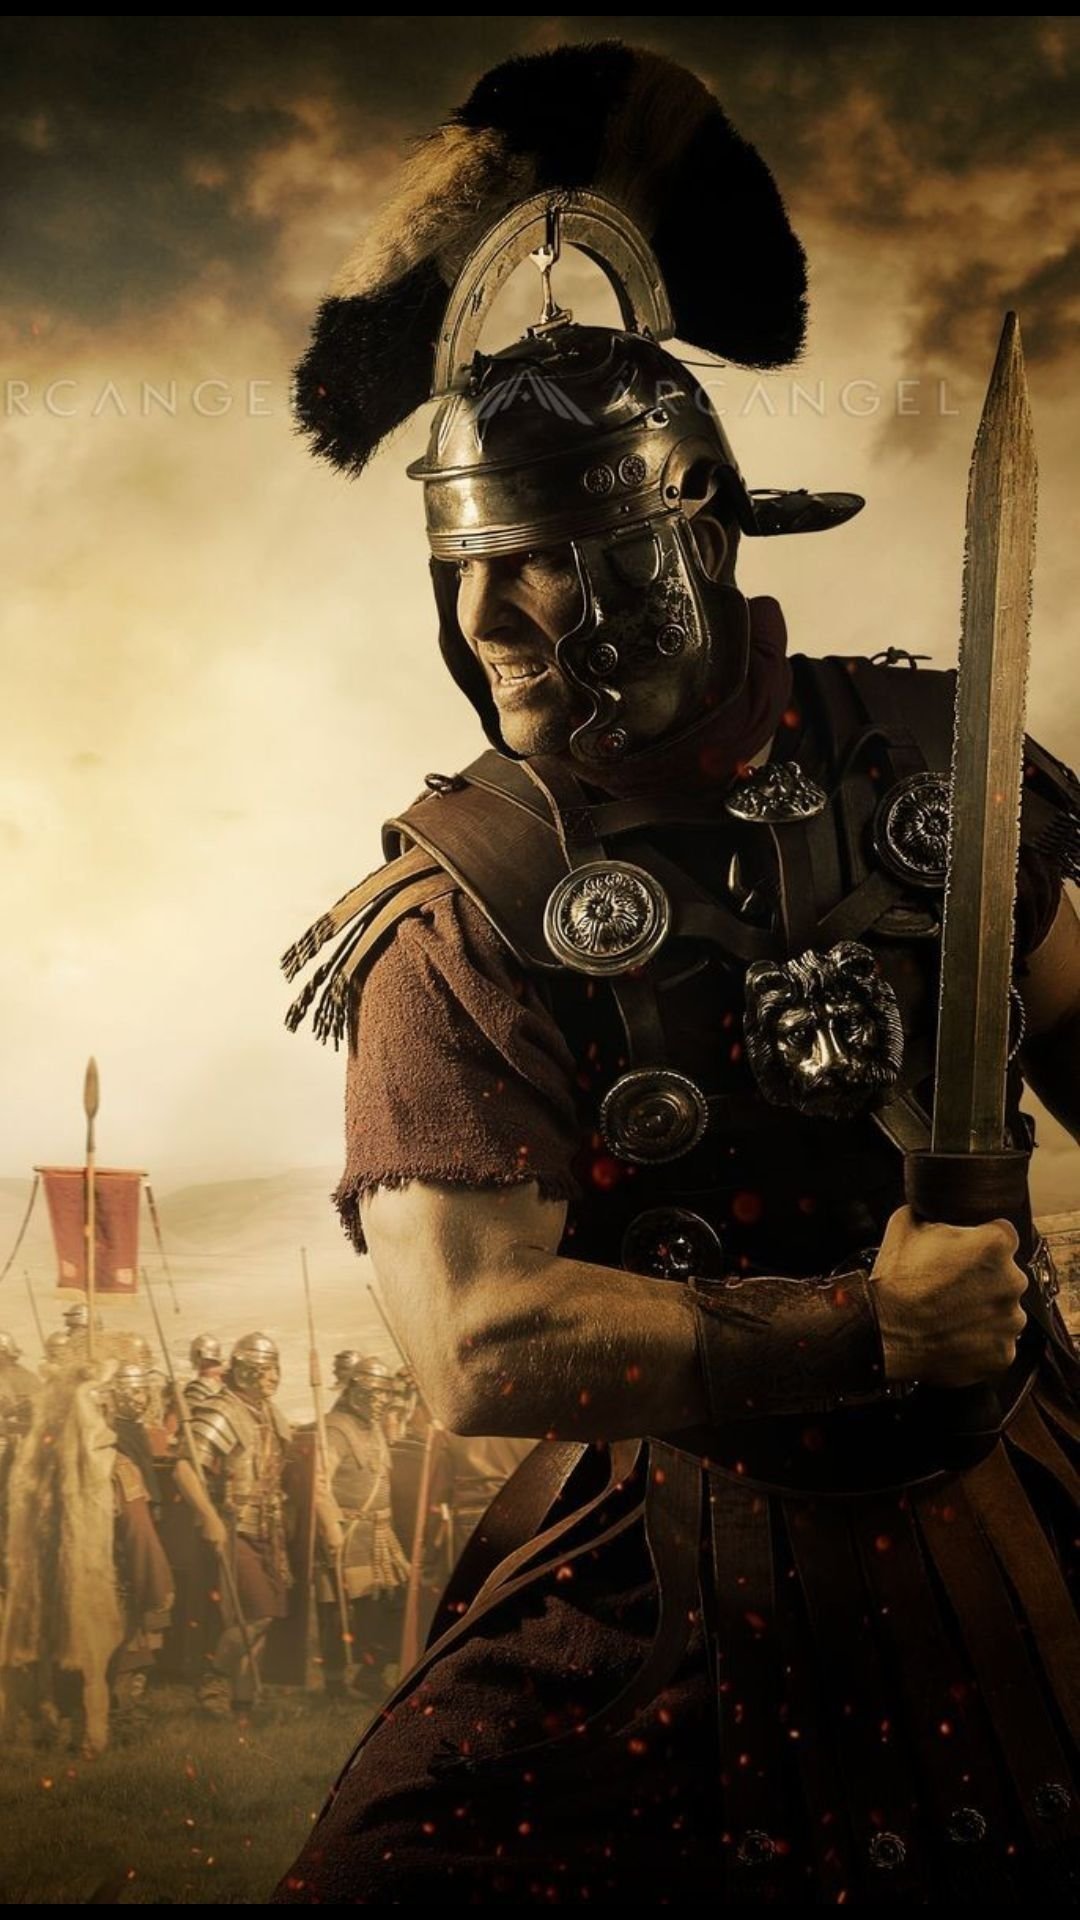 Римский воин легионер. Римский воин Центурион. Римский легионер Центурион. Римский воин Гладиатор. Центурион Римского легиона.